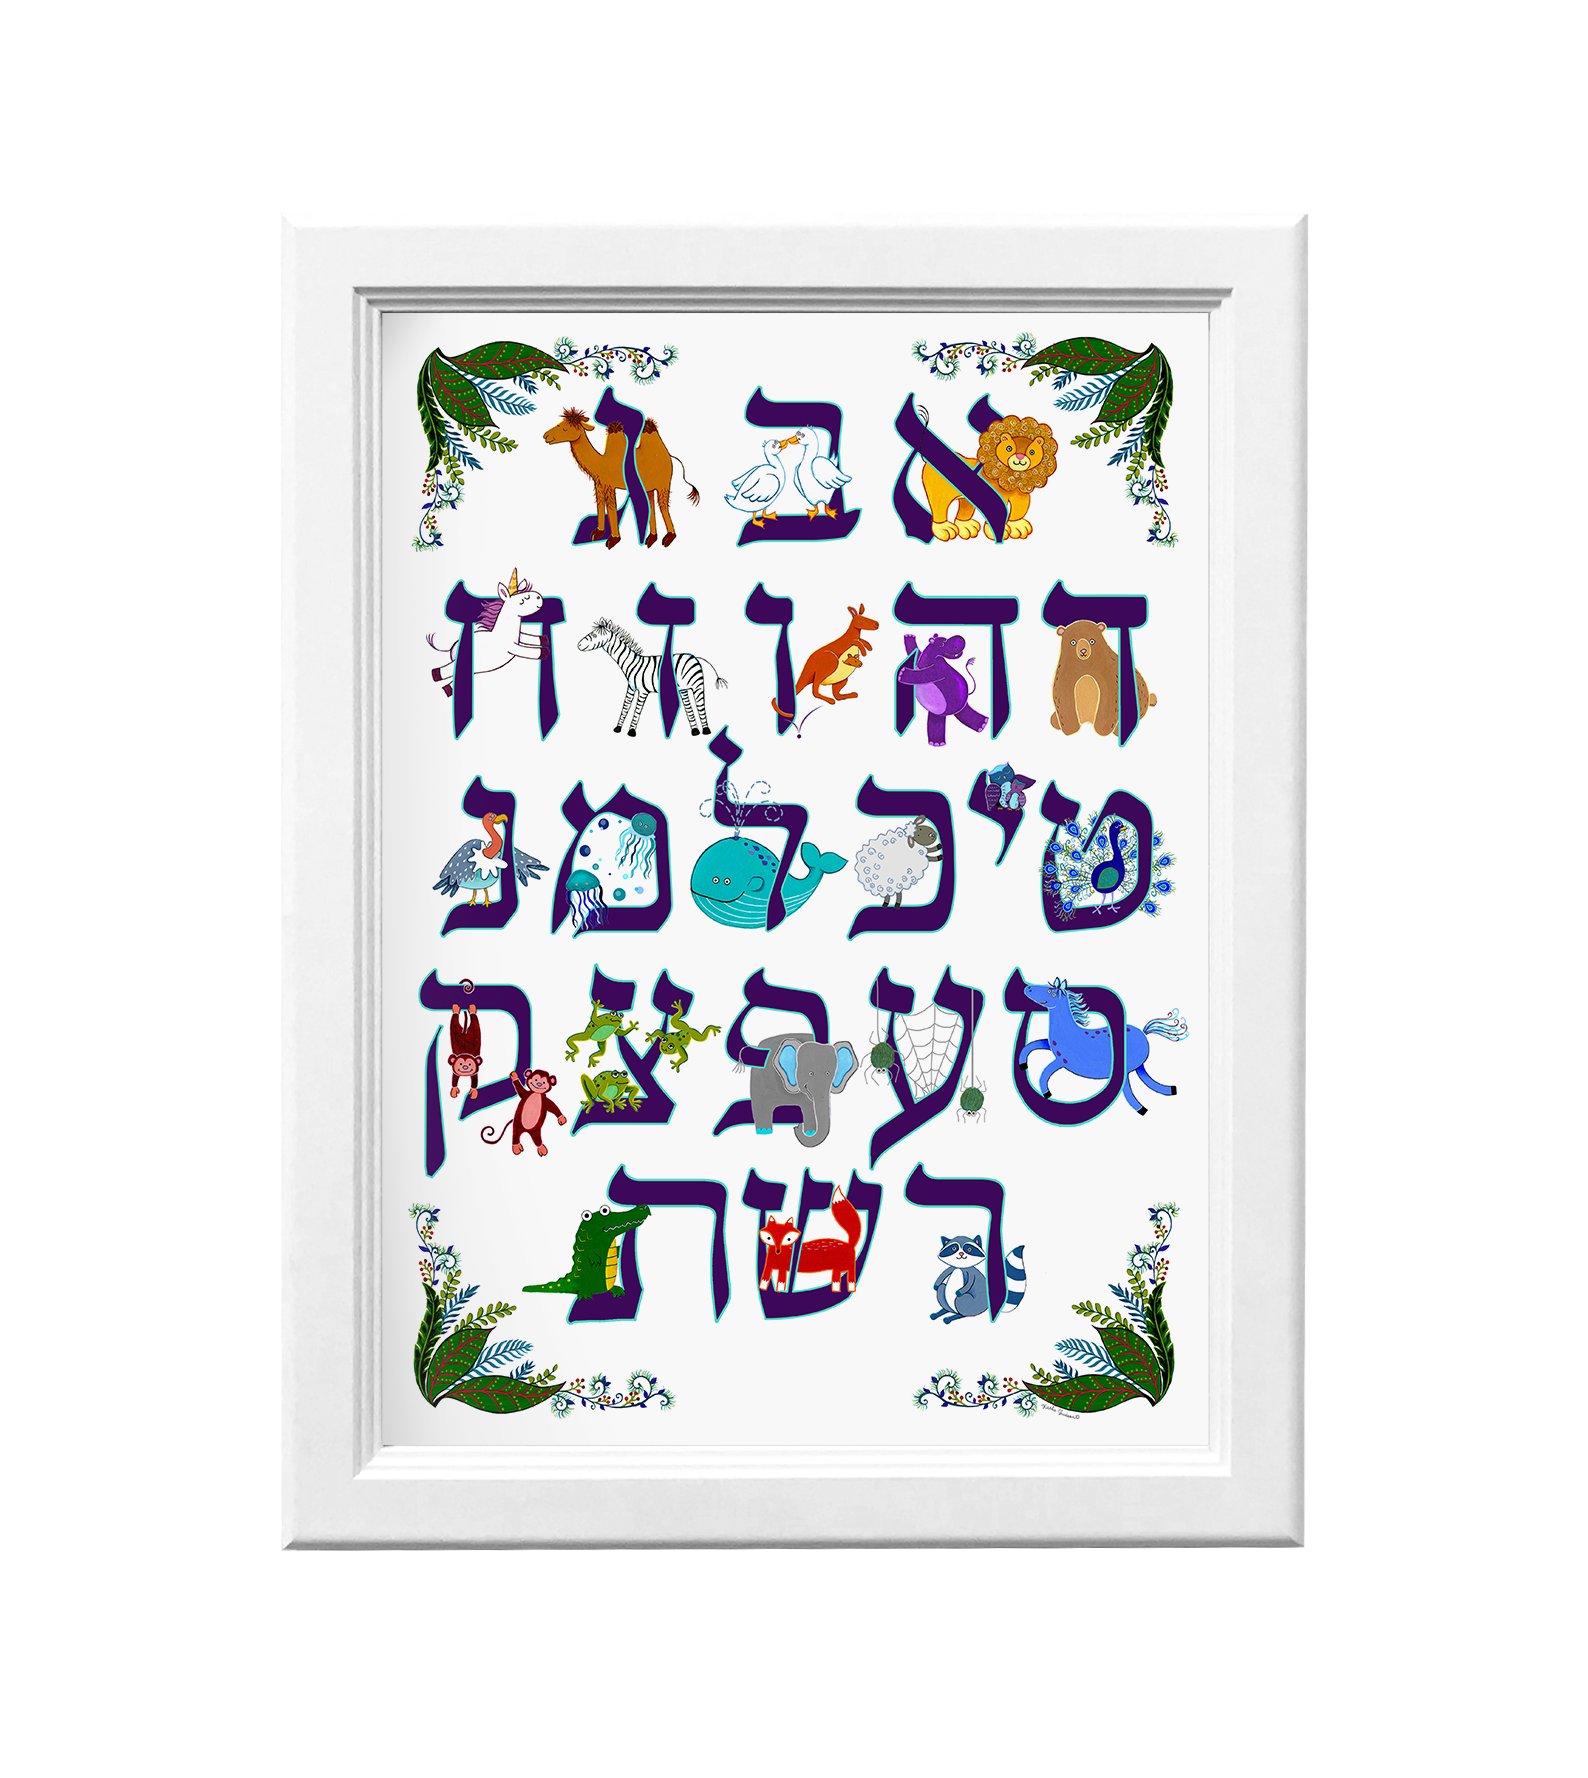 Hebrew Alef-Bet (Gold Letters) Ceramic Black Mug – Creating Destiny Graphics